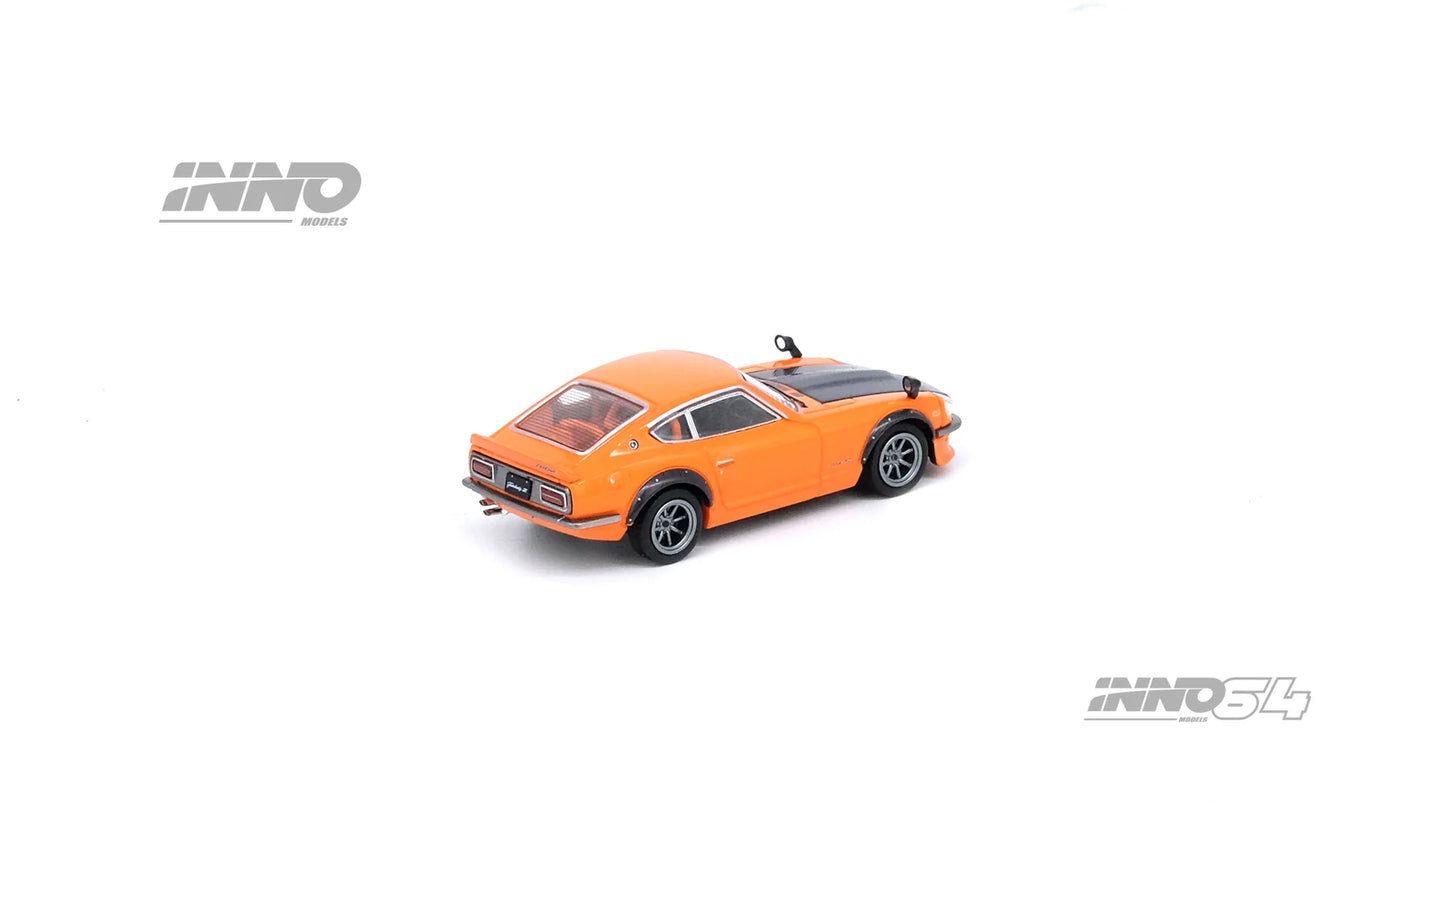 Inno Models Inno64 Nissan Fairlady Z (S30) Orange with Carbon Bonnet